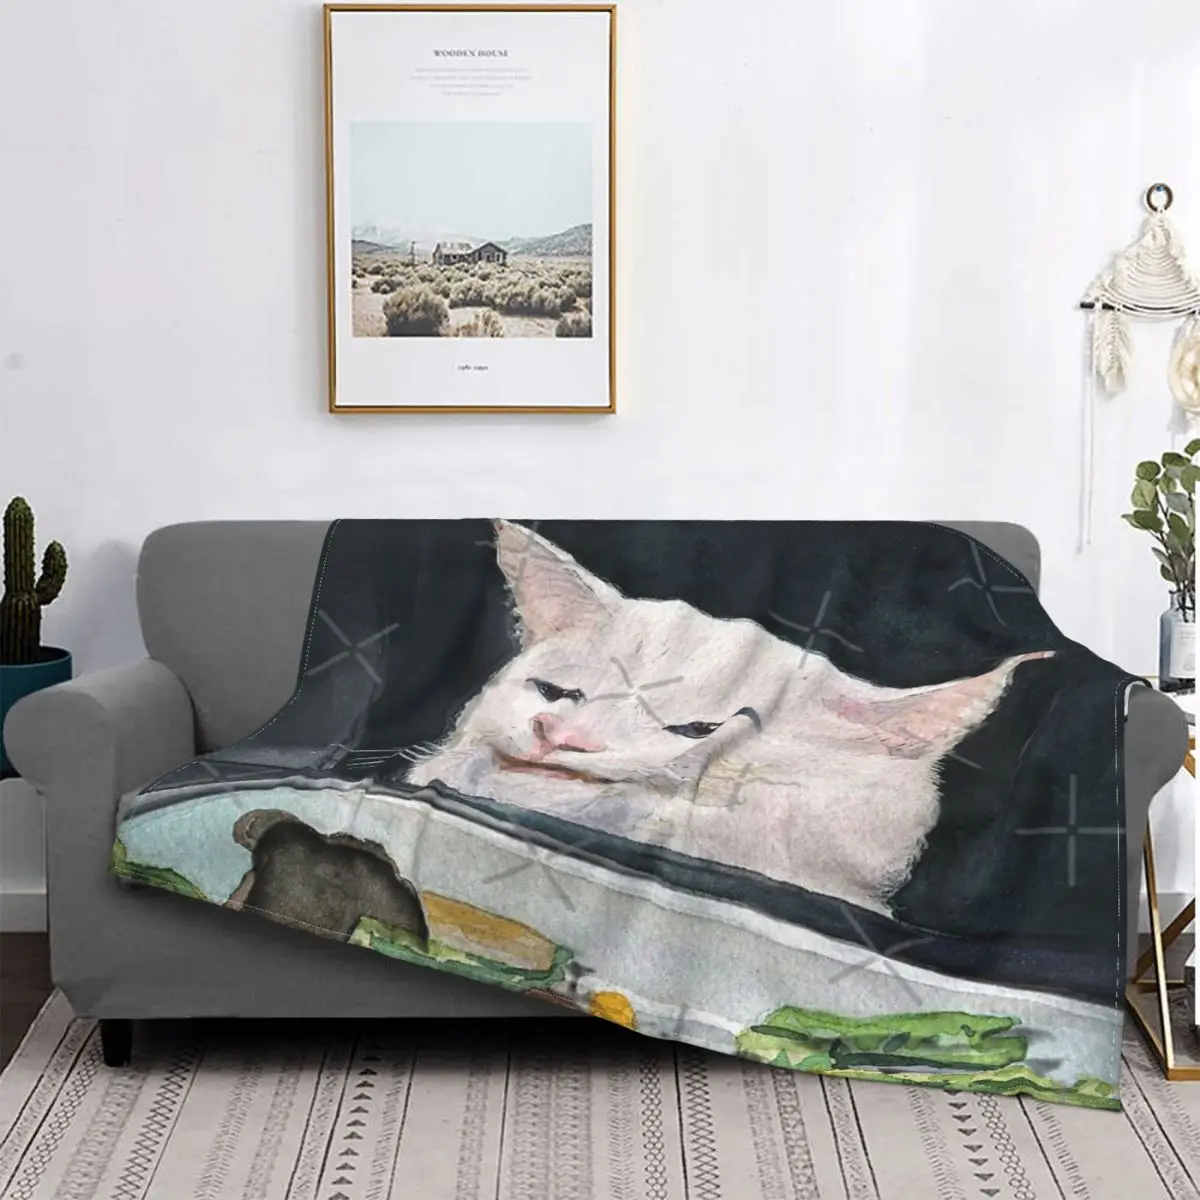 

Manta de Meme-8 de gato para mujer, colcha a cuadros para cama, sofar cama, toalla de playa, Sudadera con capucha, funda para niñ